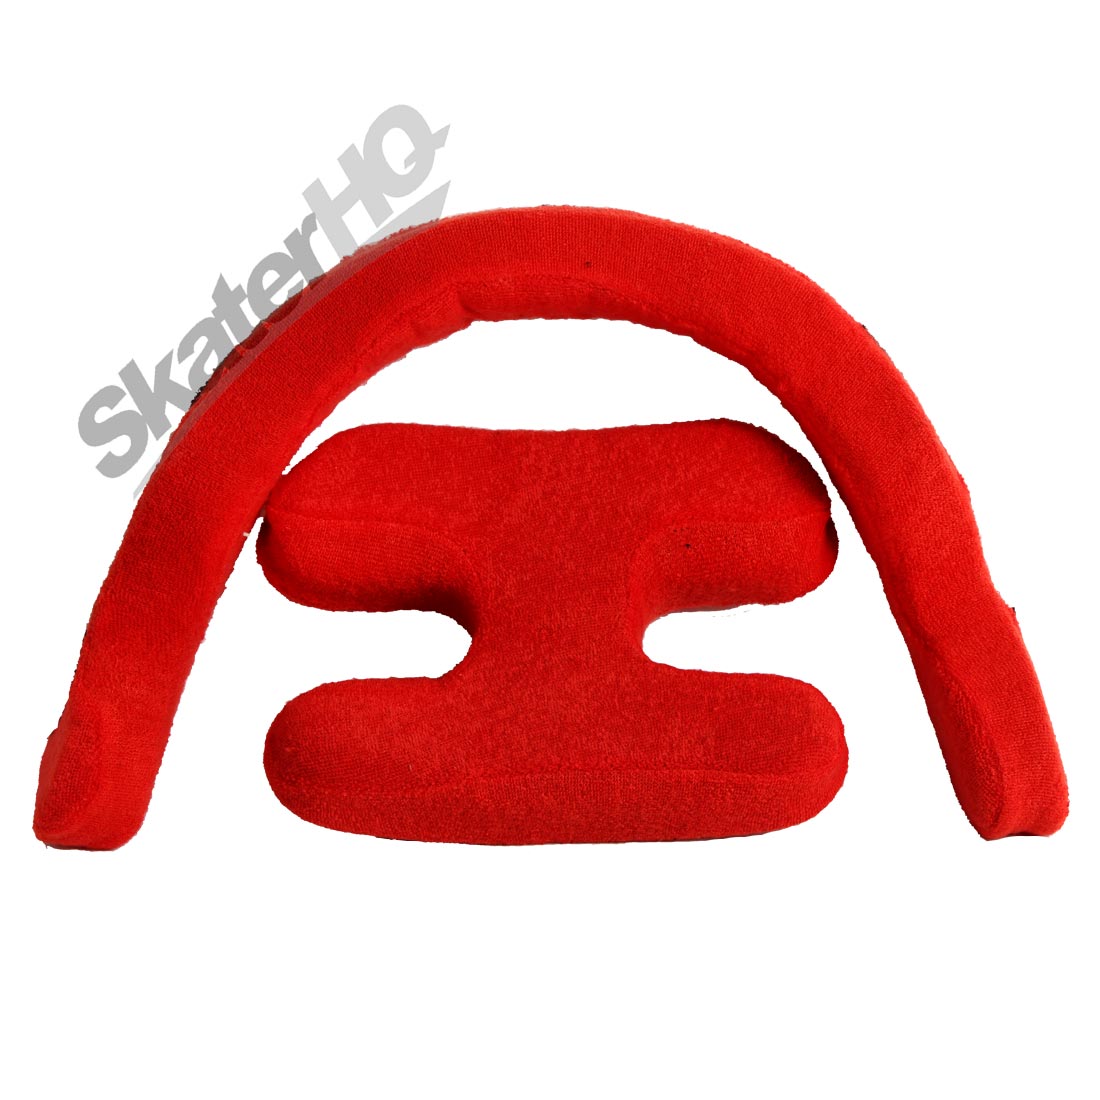 Triple 8 Sweatsaver Liner - Red - S Helmet liners